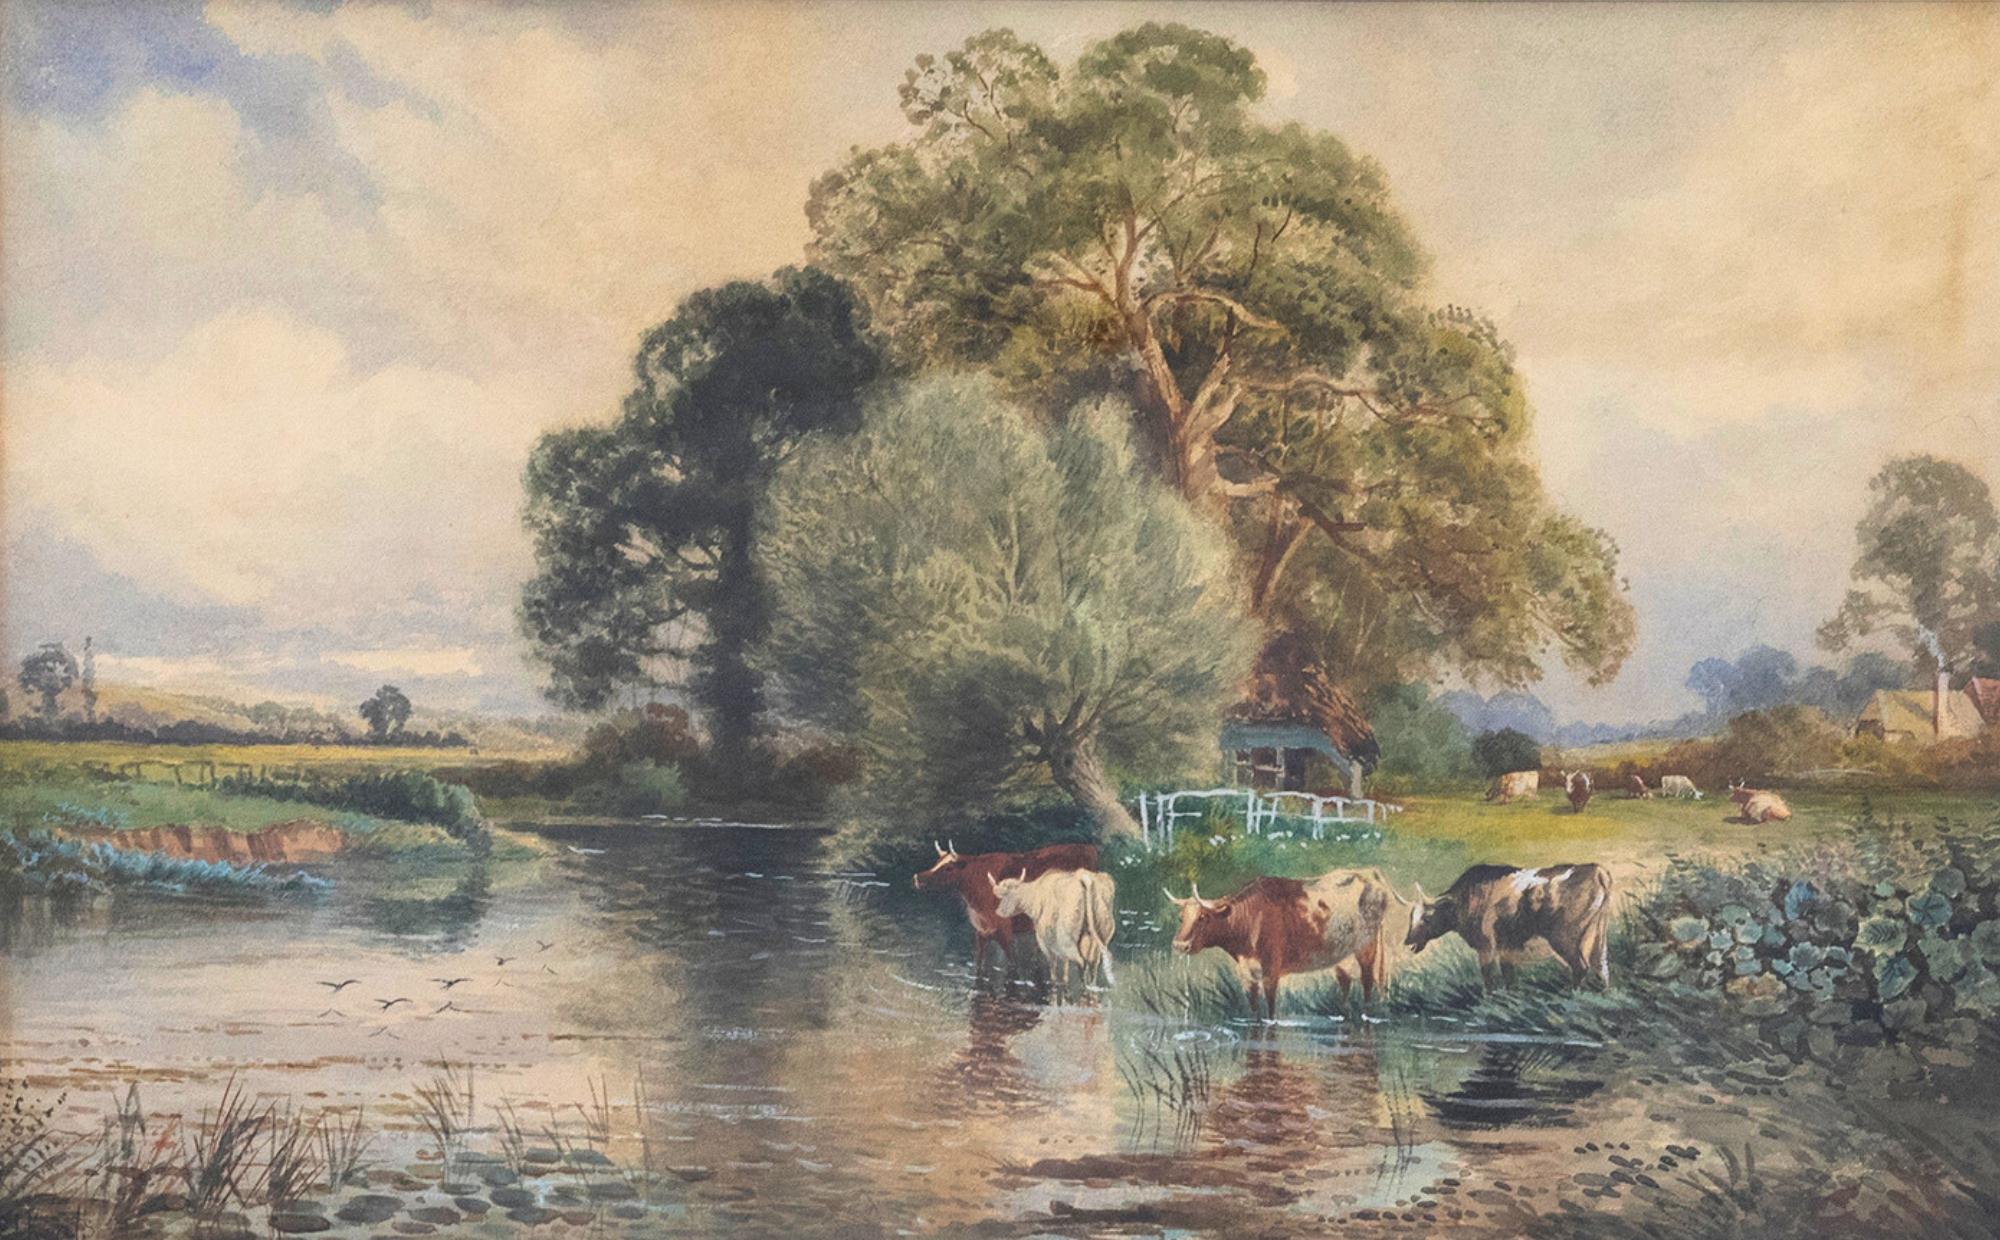 Cecil Jack Keats - Late 19th Century Watercolour, Cattle Watering in a River - Art by C.J. Keats